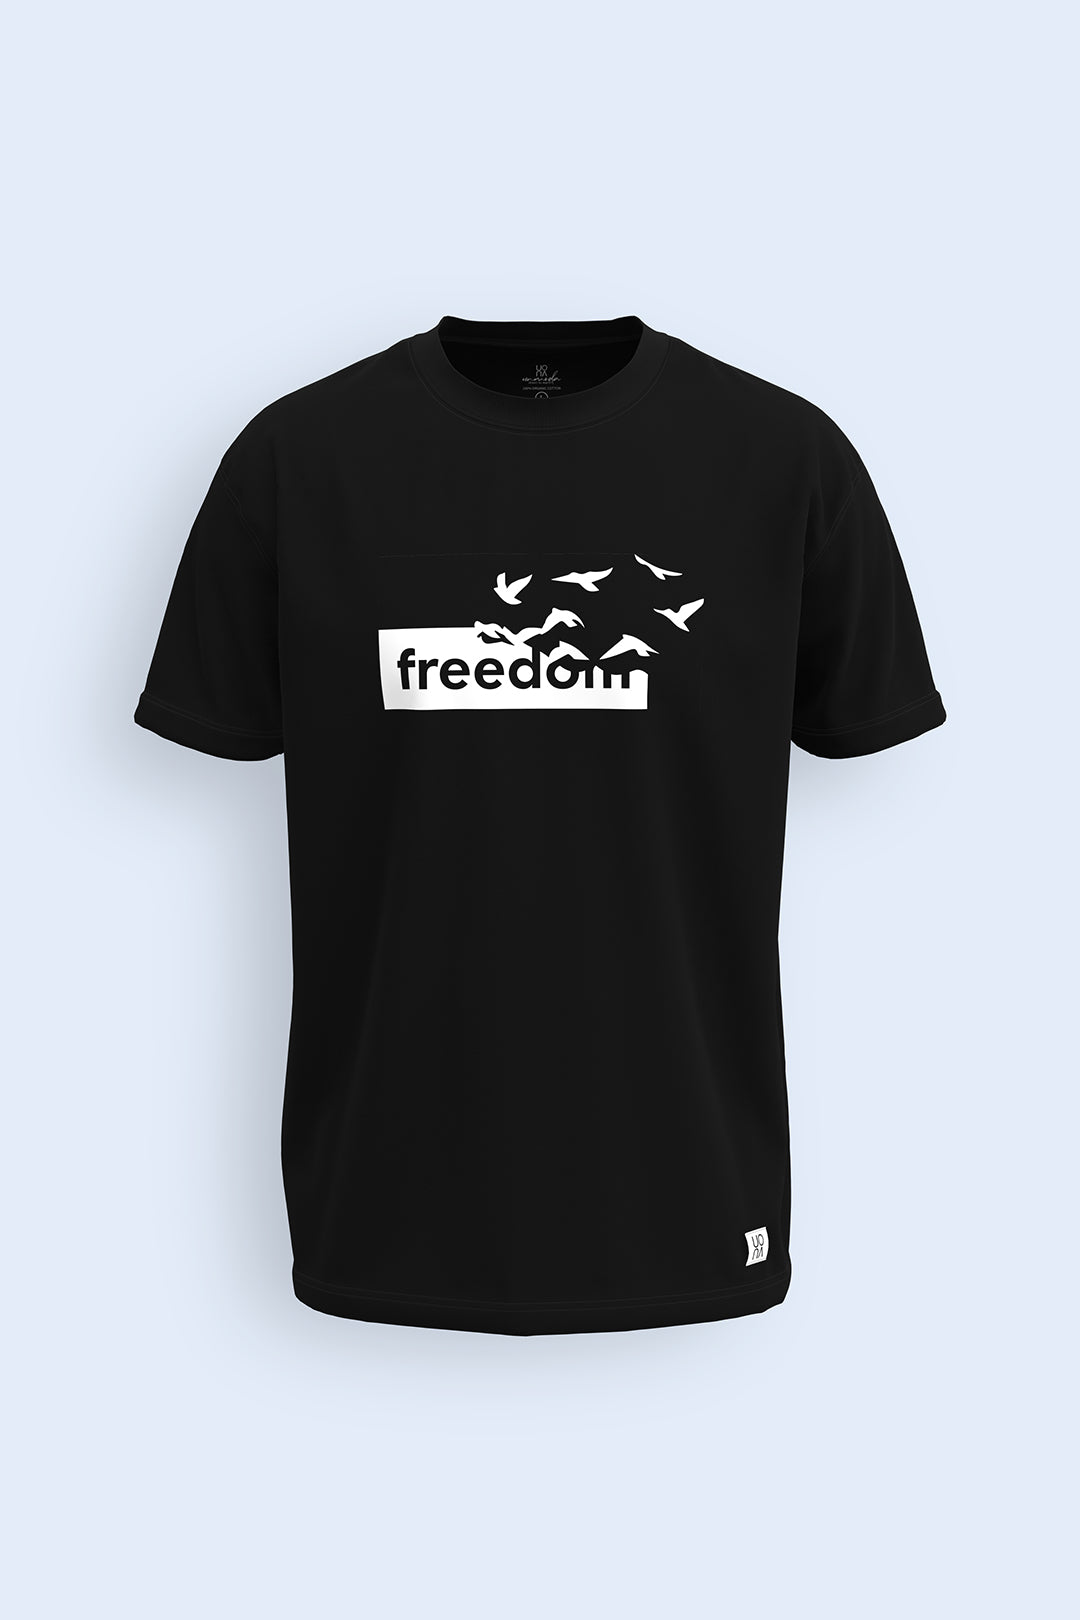 Unisex 100% Organic Cotton Classic Freedom T-Shirt